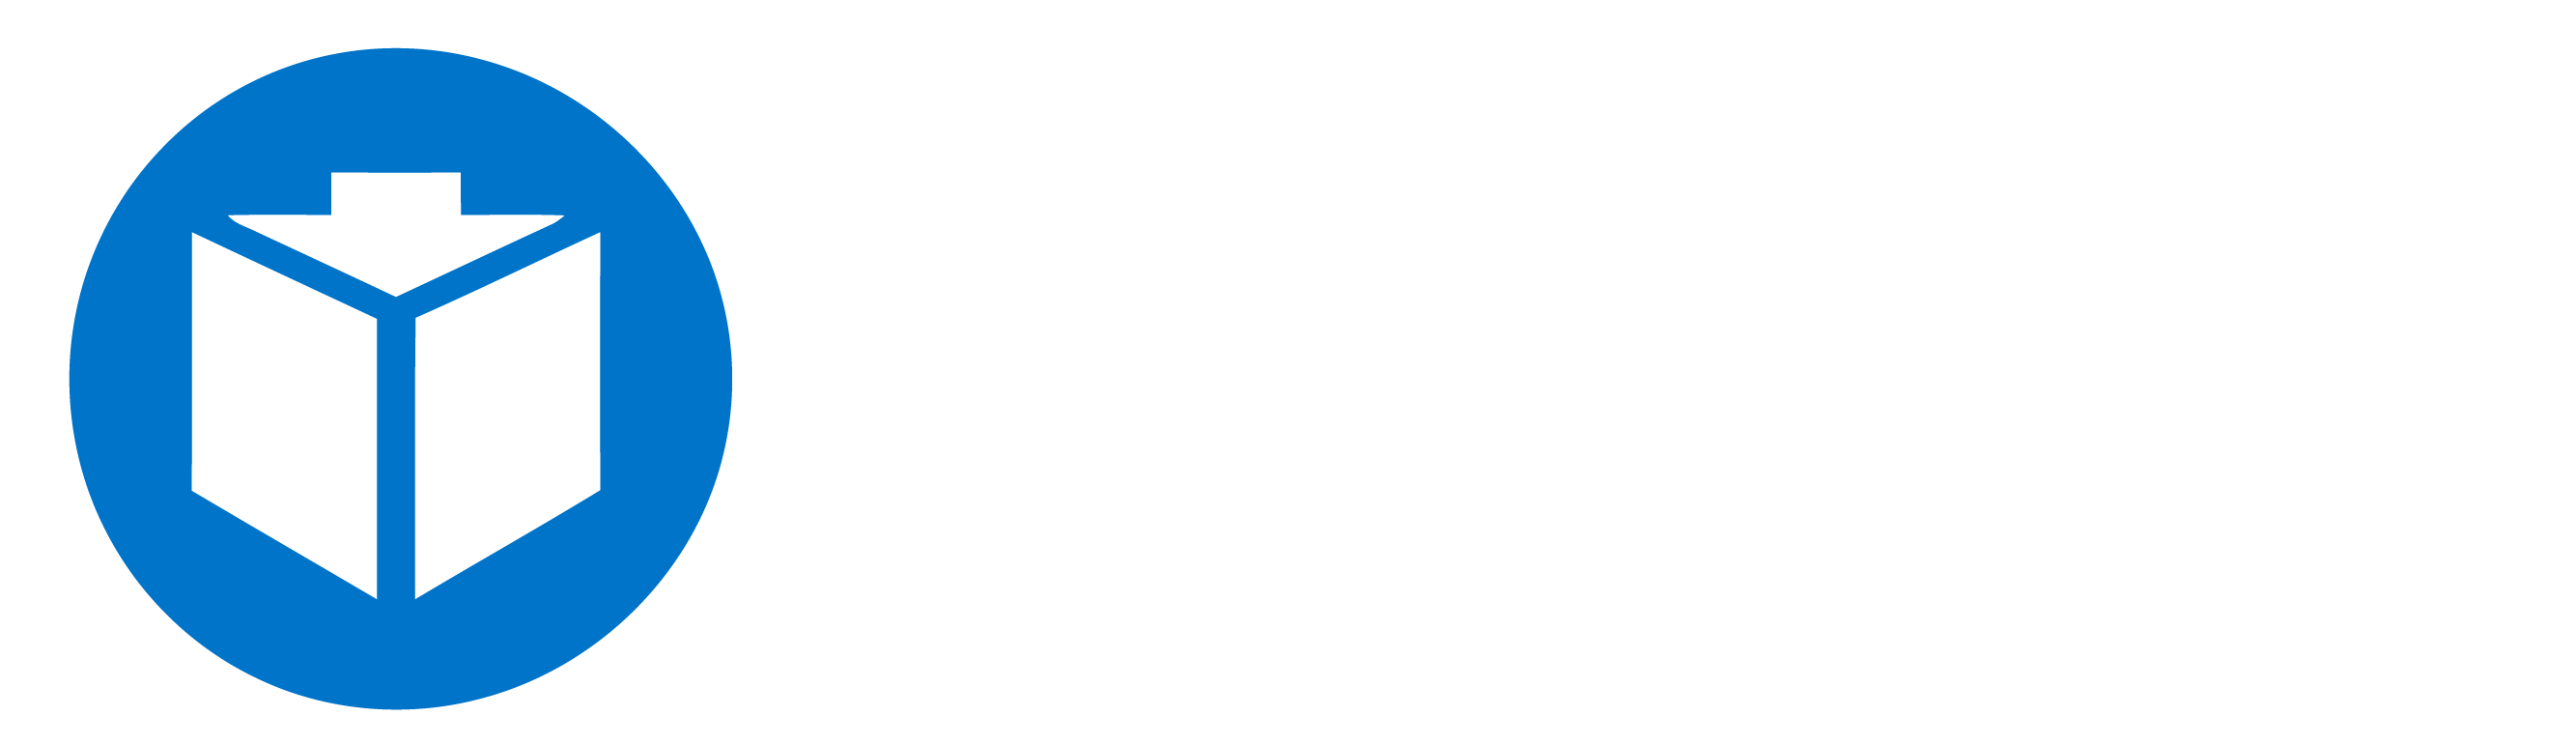 link controls logo